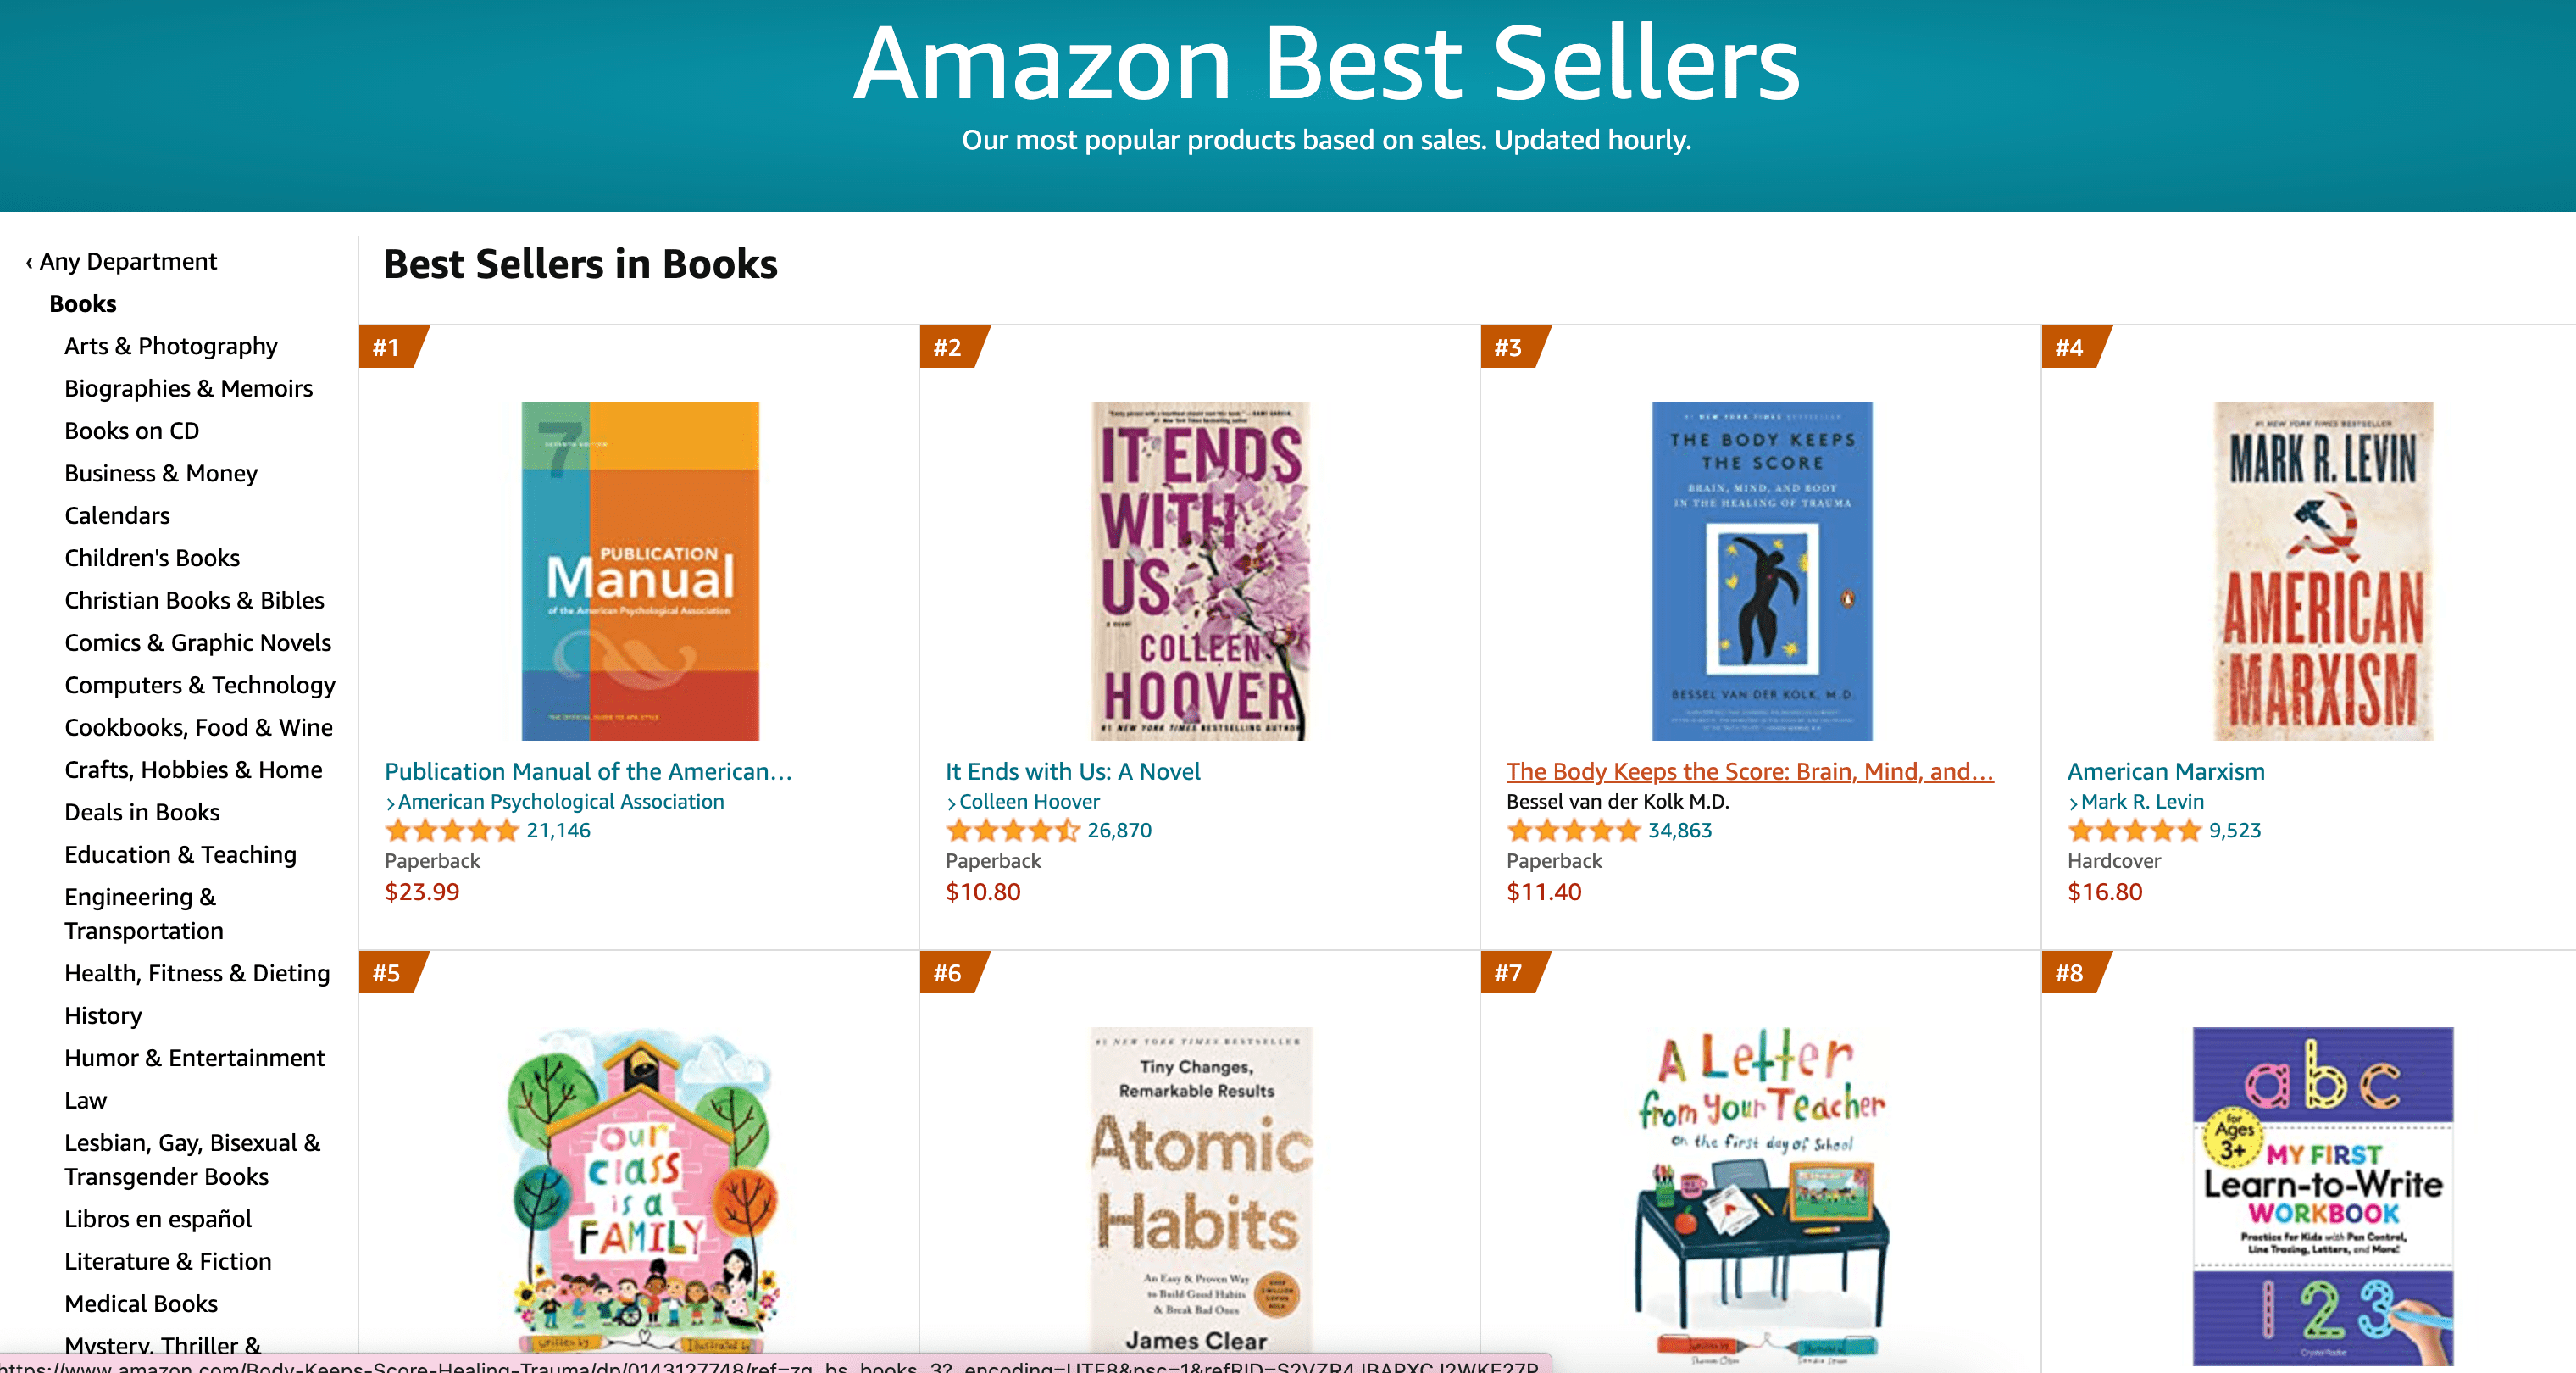 Amazon Best Sellers list